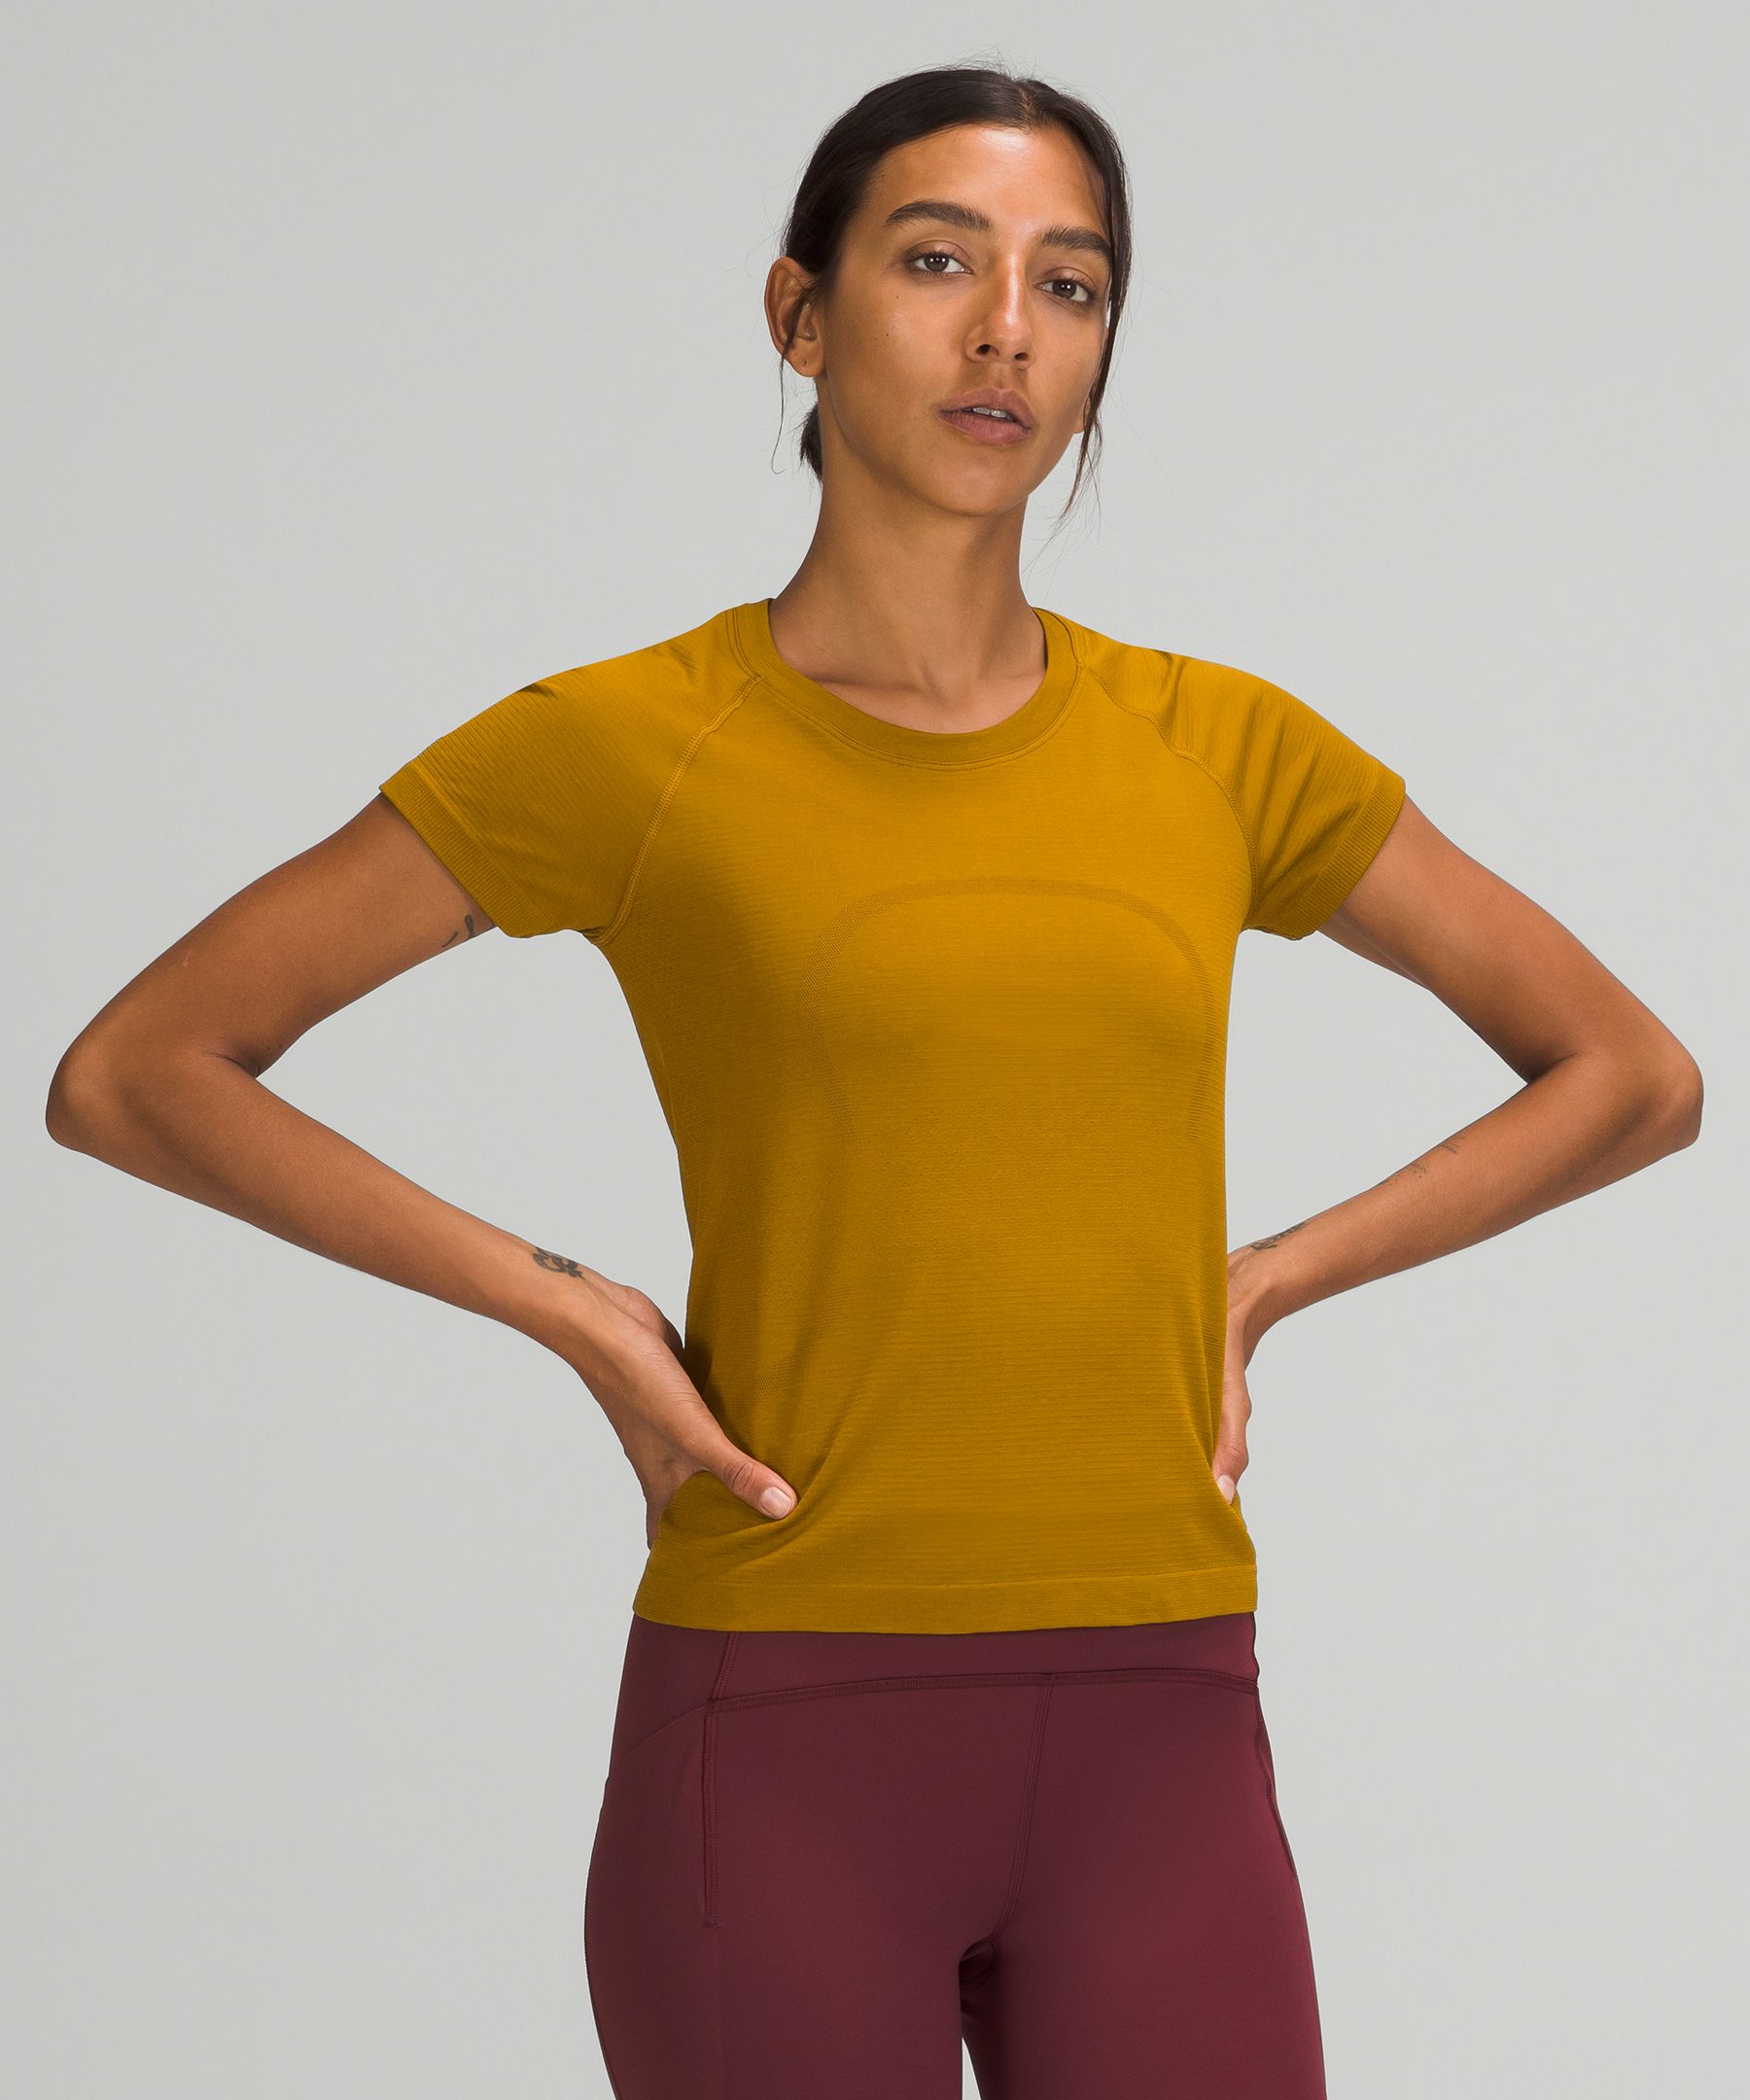 Lululemon Swiftly Tech Short Sleeve Shirt 2.0 Race Length In Gold Spice